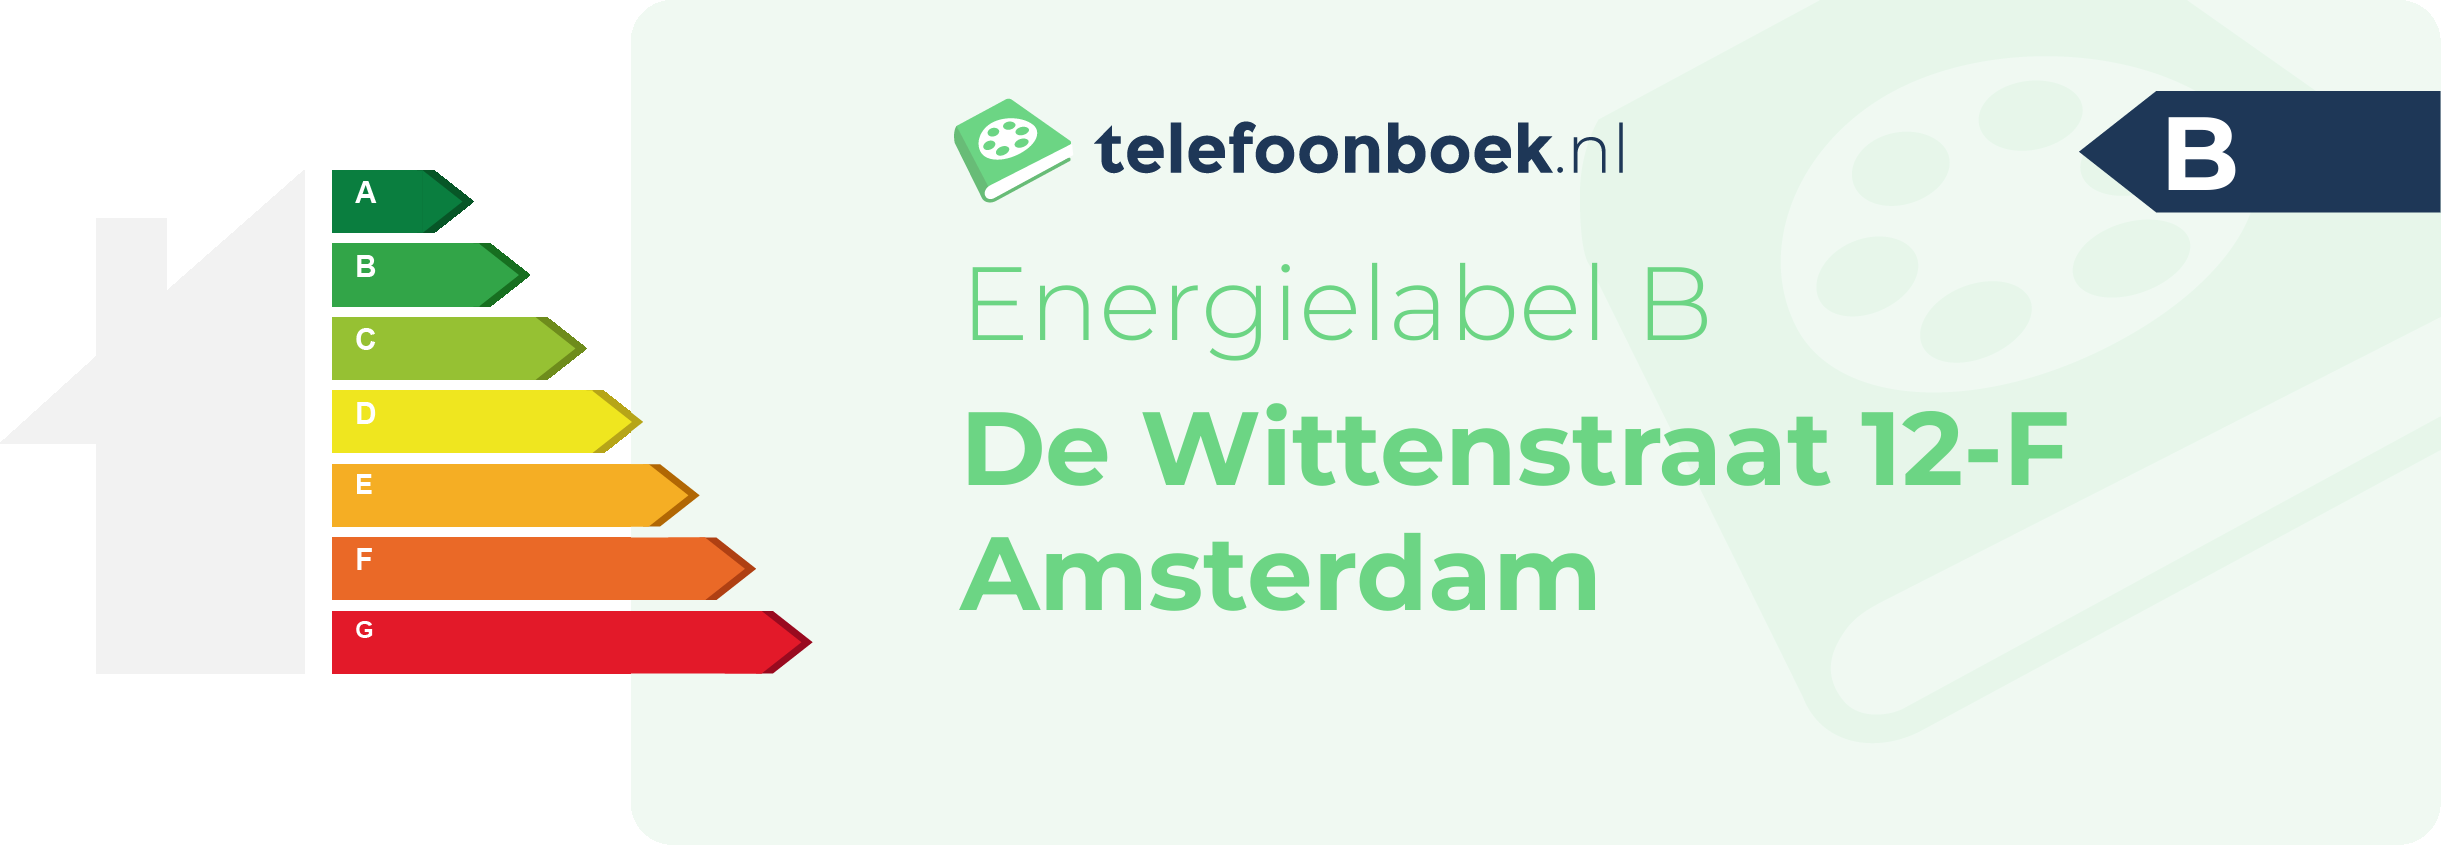 Energielabel De Wittenstraat 12-F Amsterdam